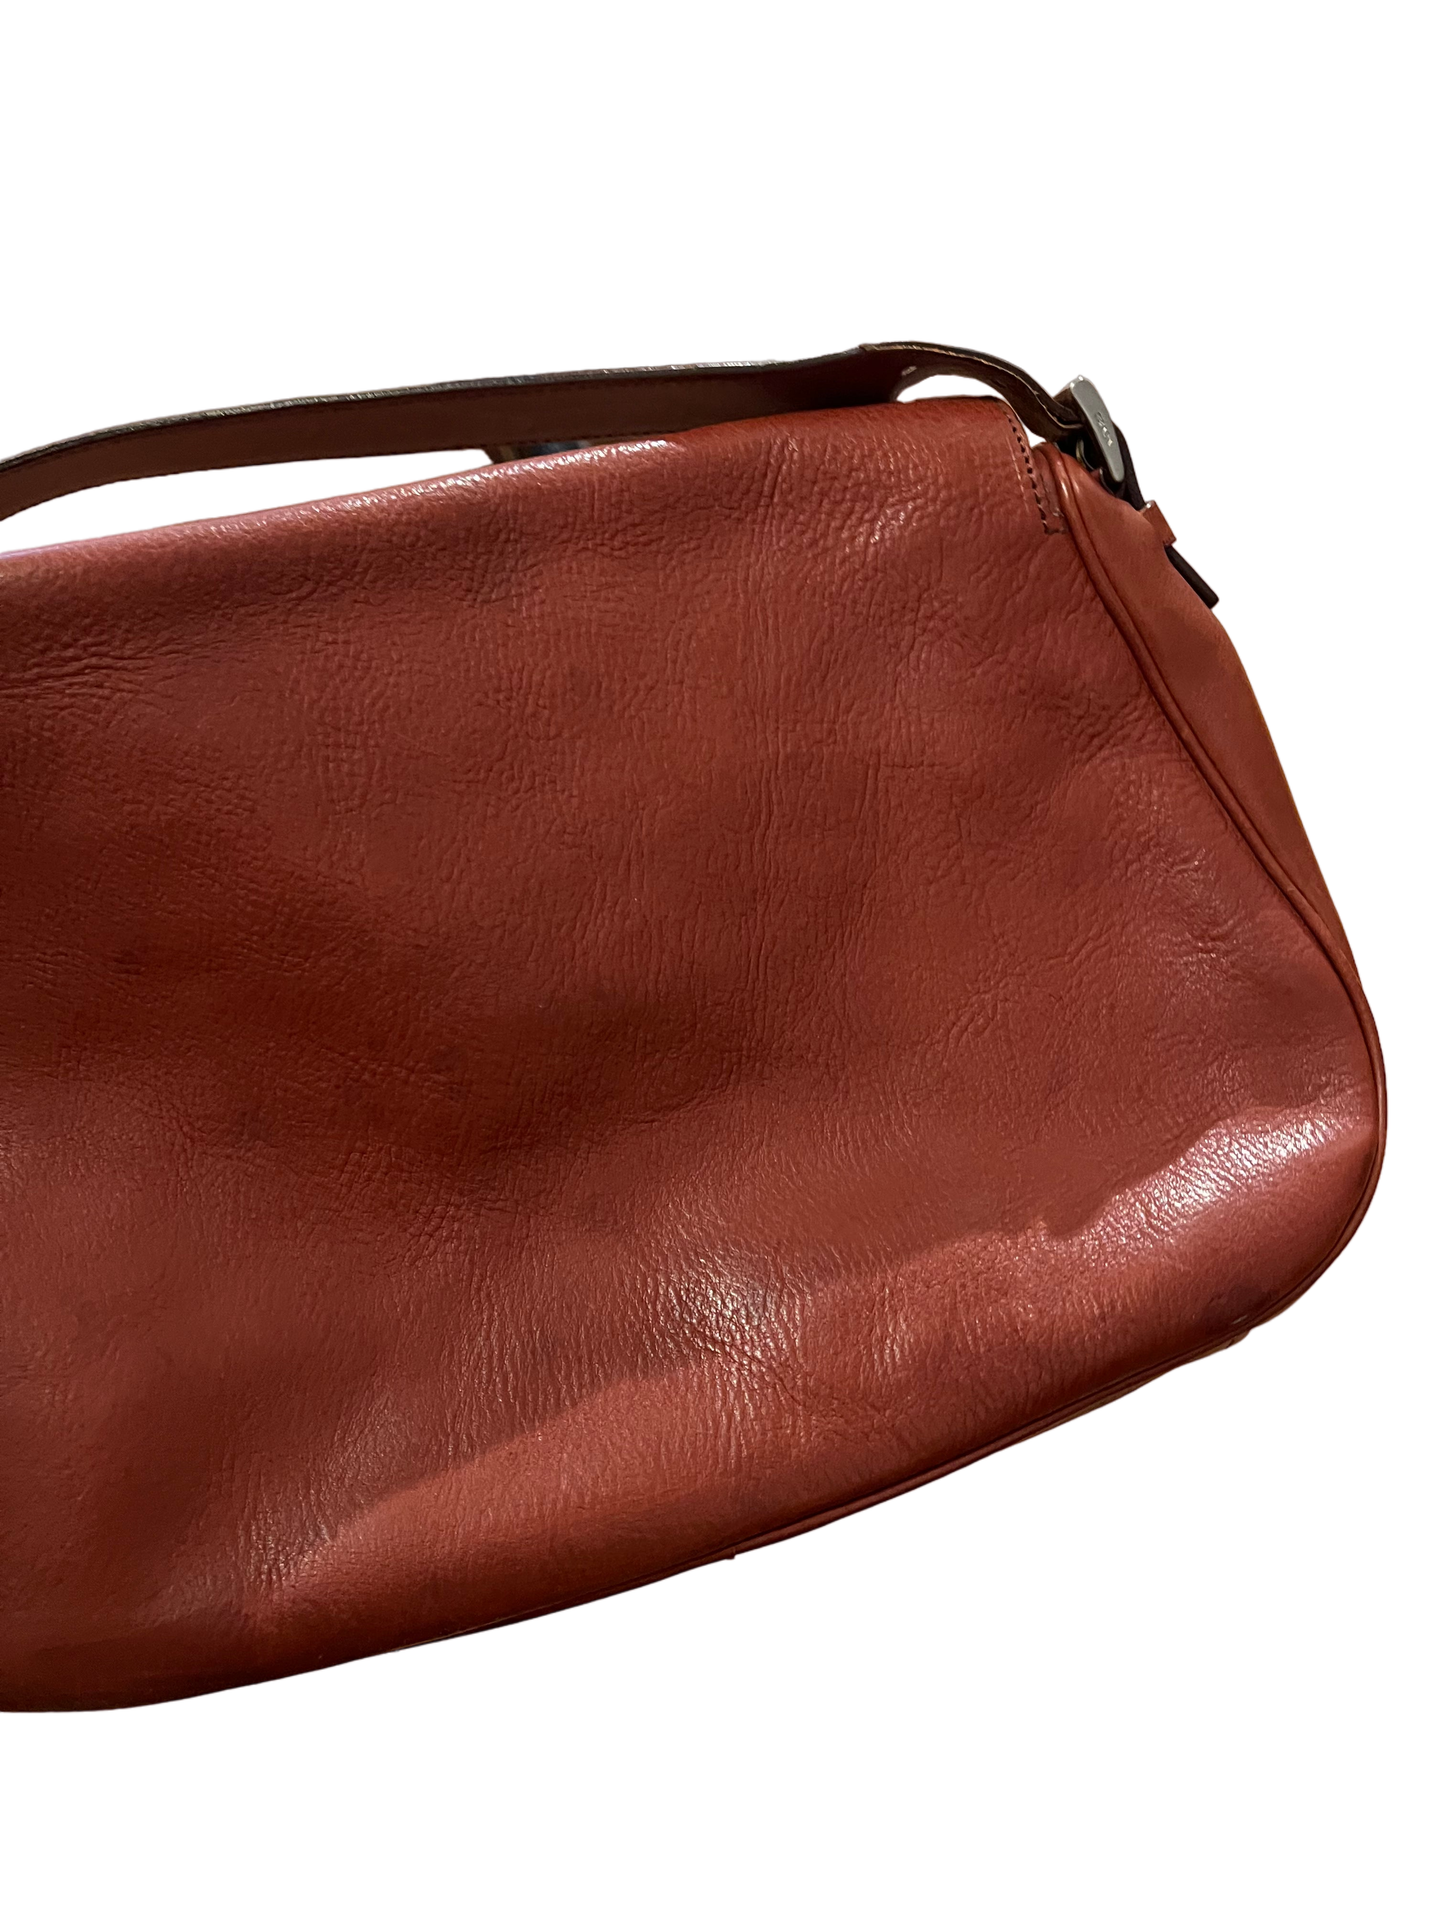 Prada Distressed Leather Shoulder Bag *Runway*